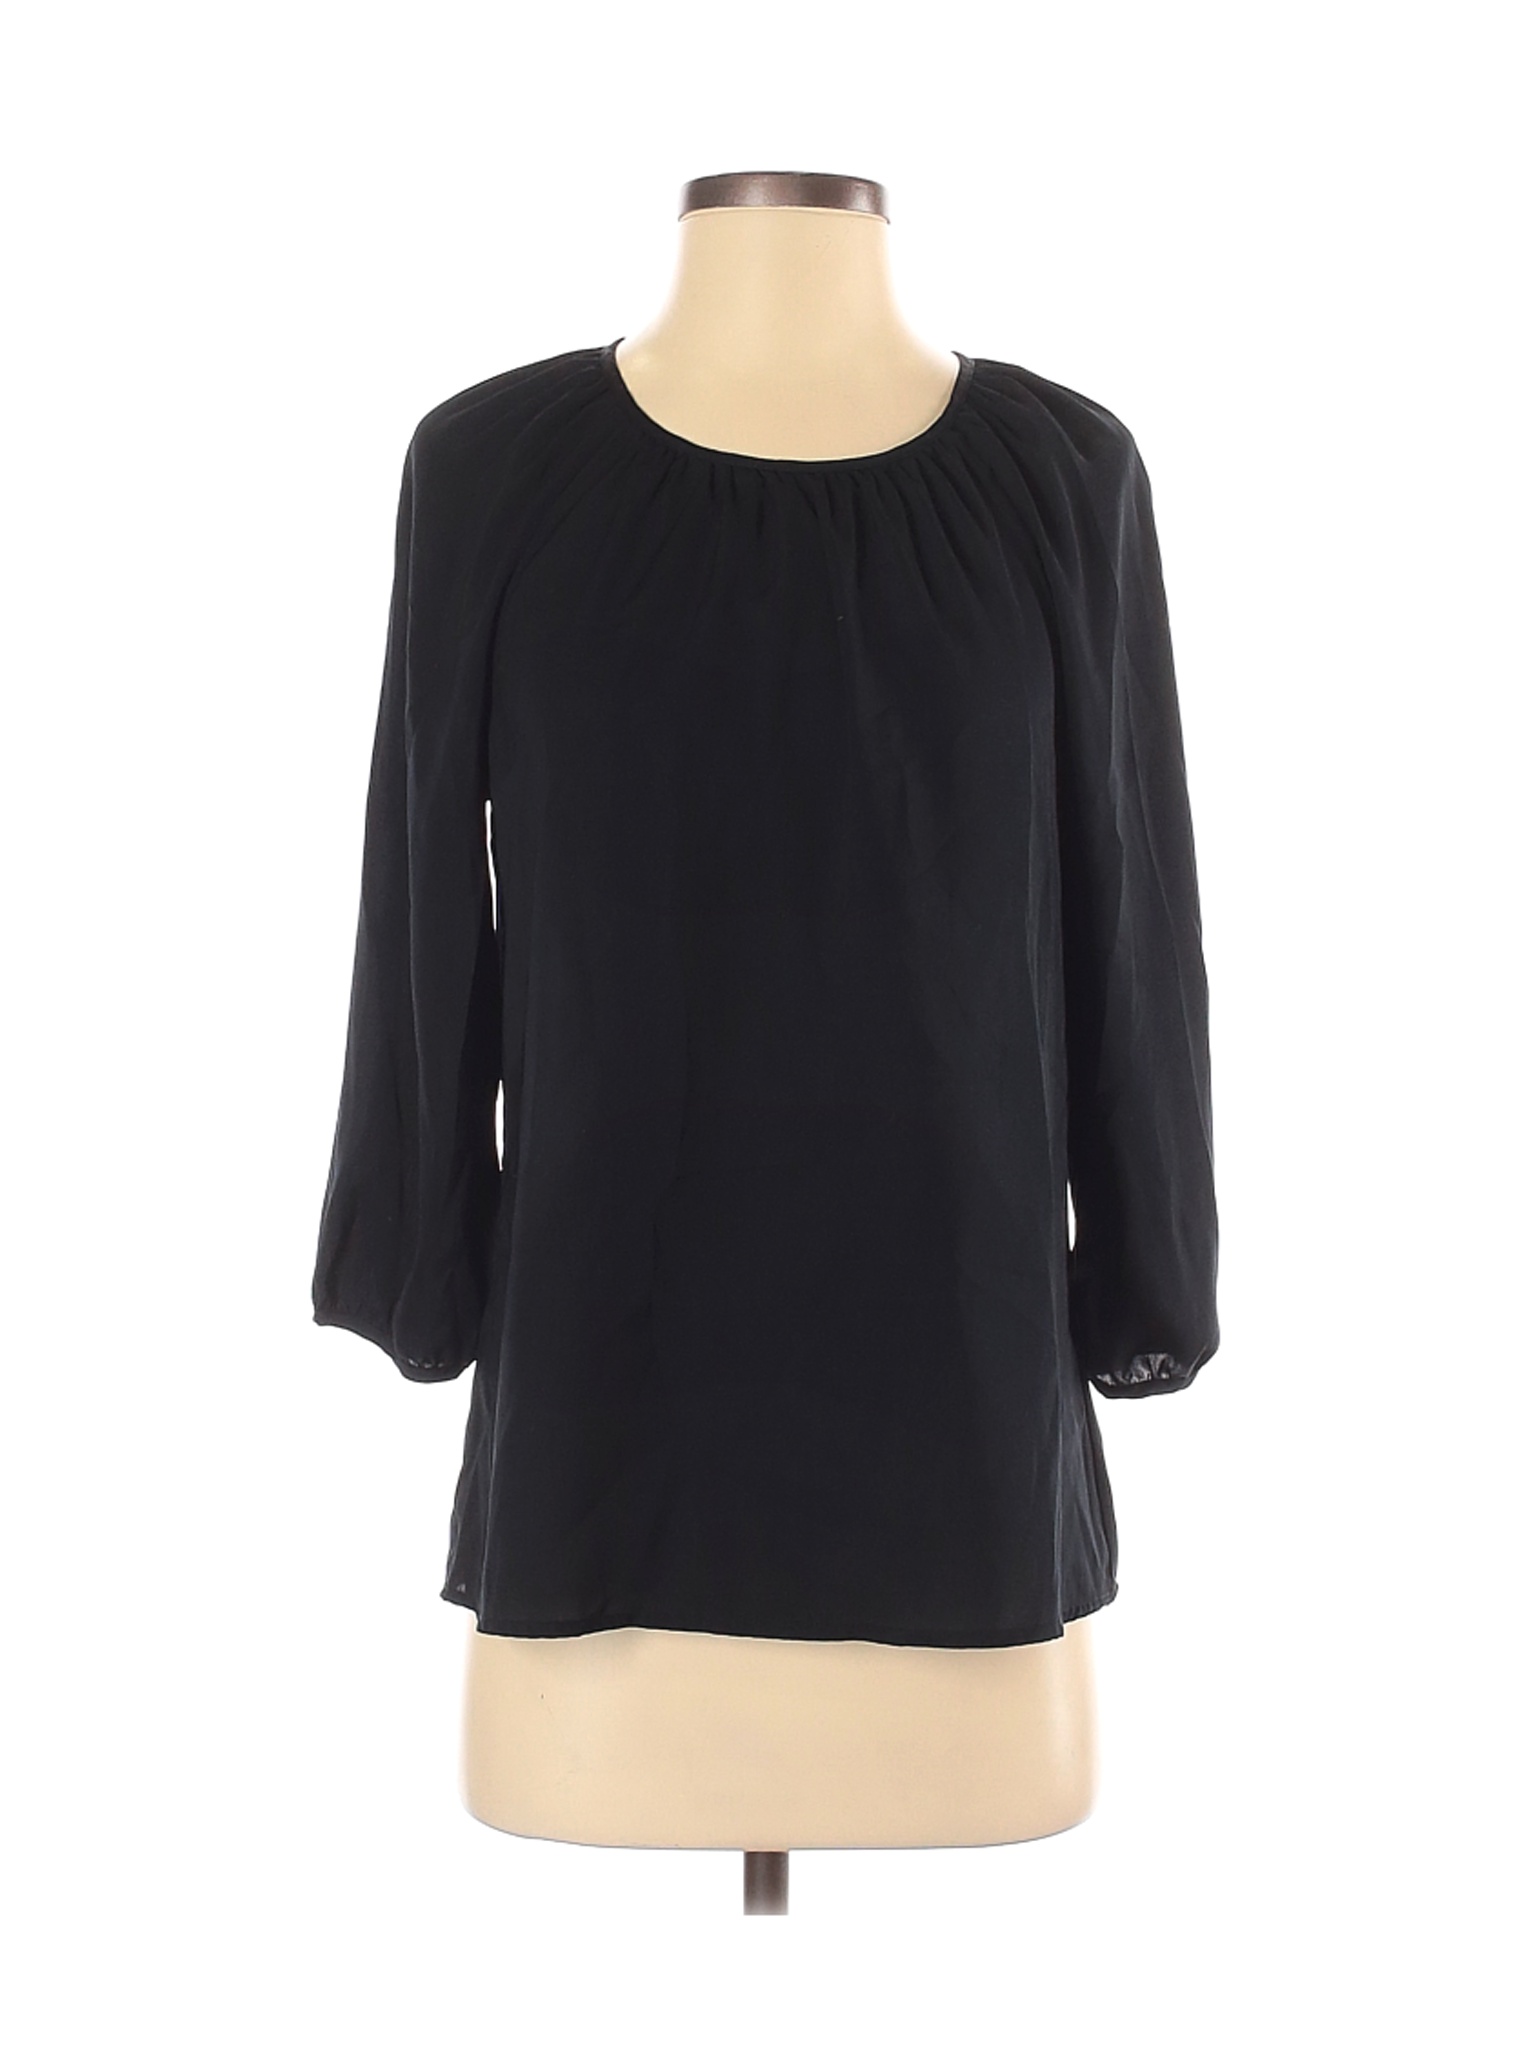 Old Navy Women Black Long Sleeve Blouse S | eBay